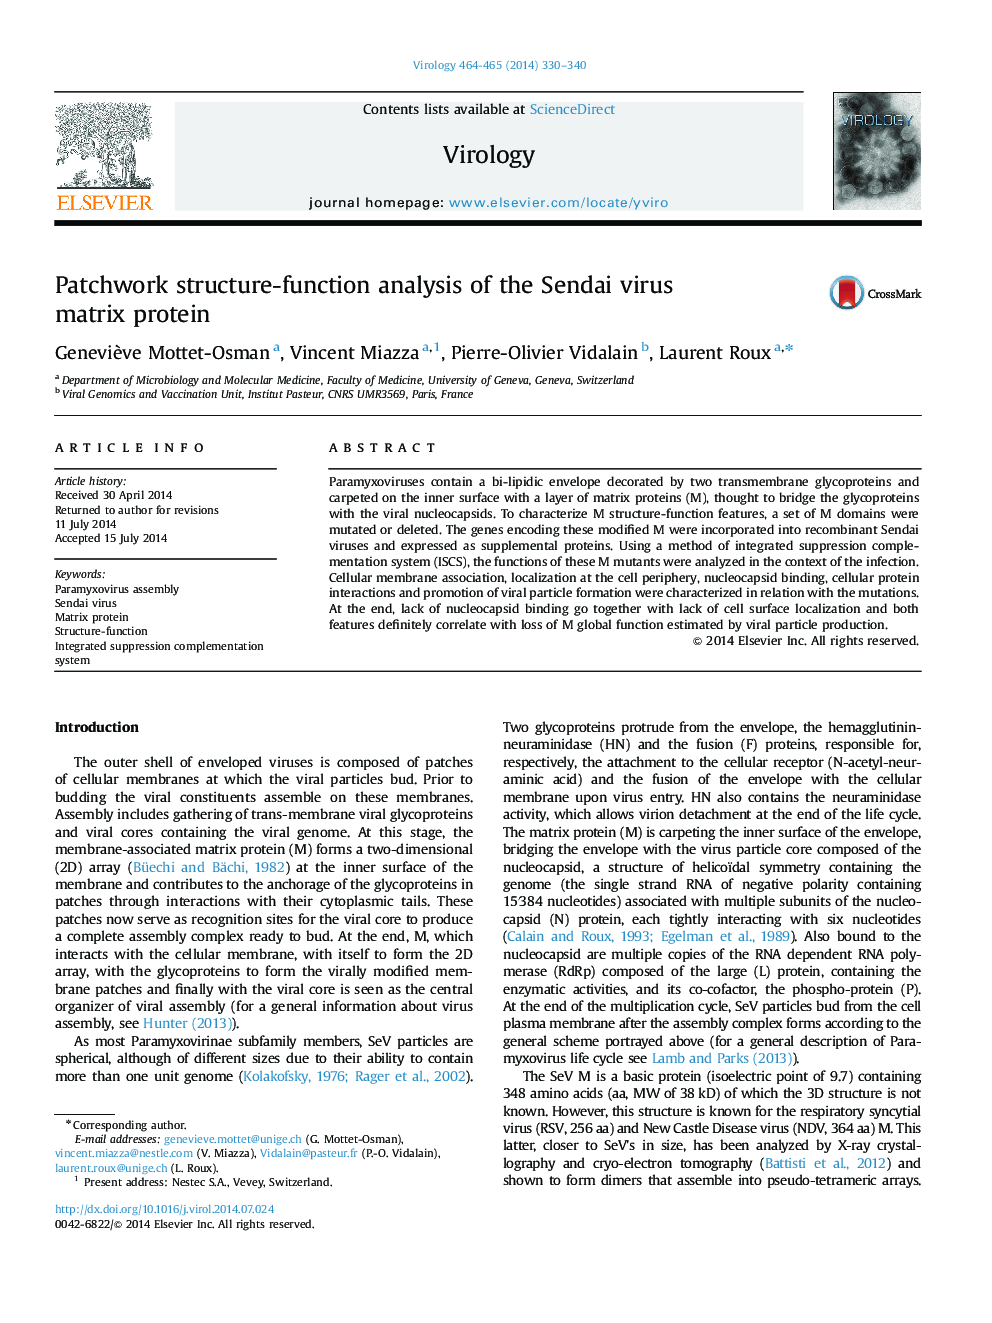 Patchwork structure-function analysis of the Sendai virus matrix protein